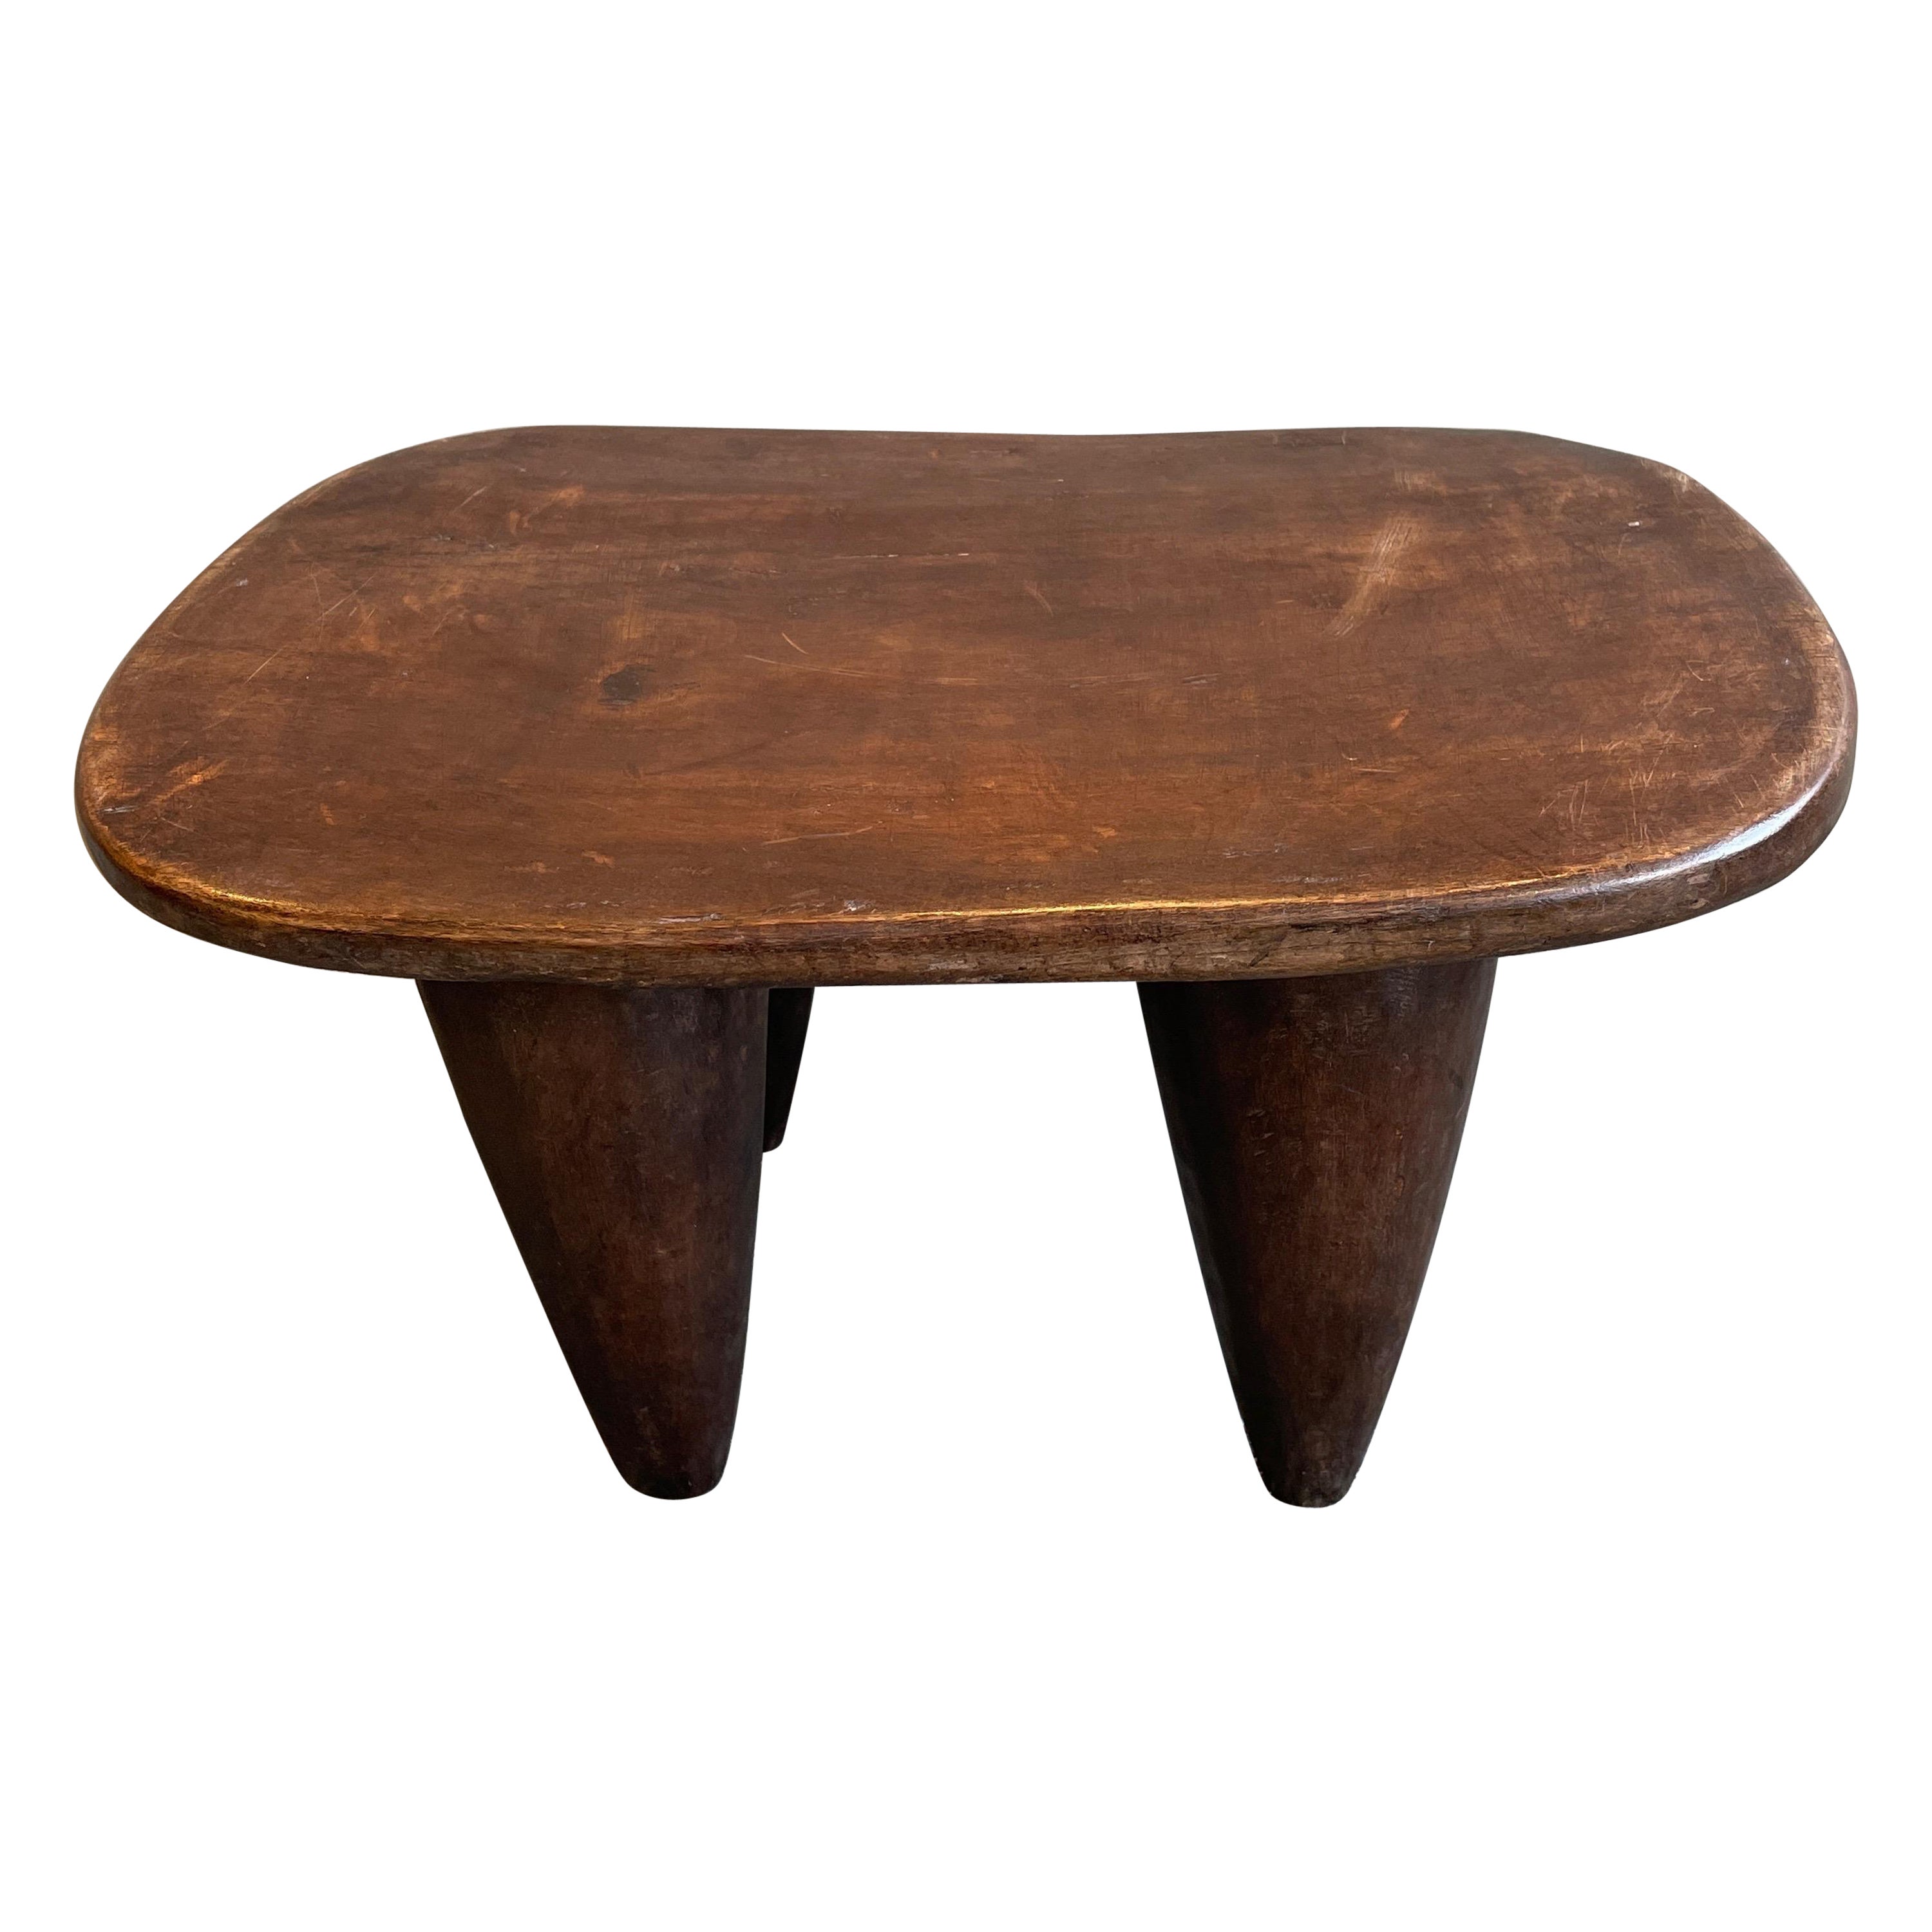 Small Senufo stool